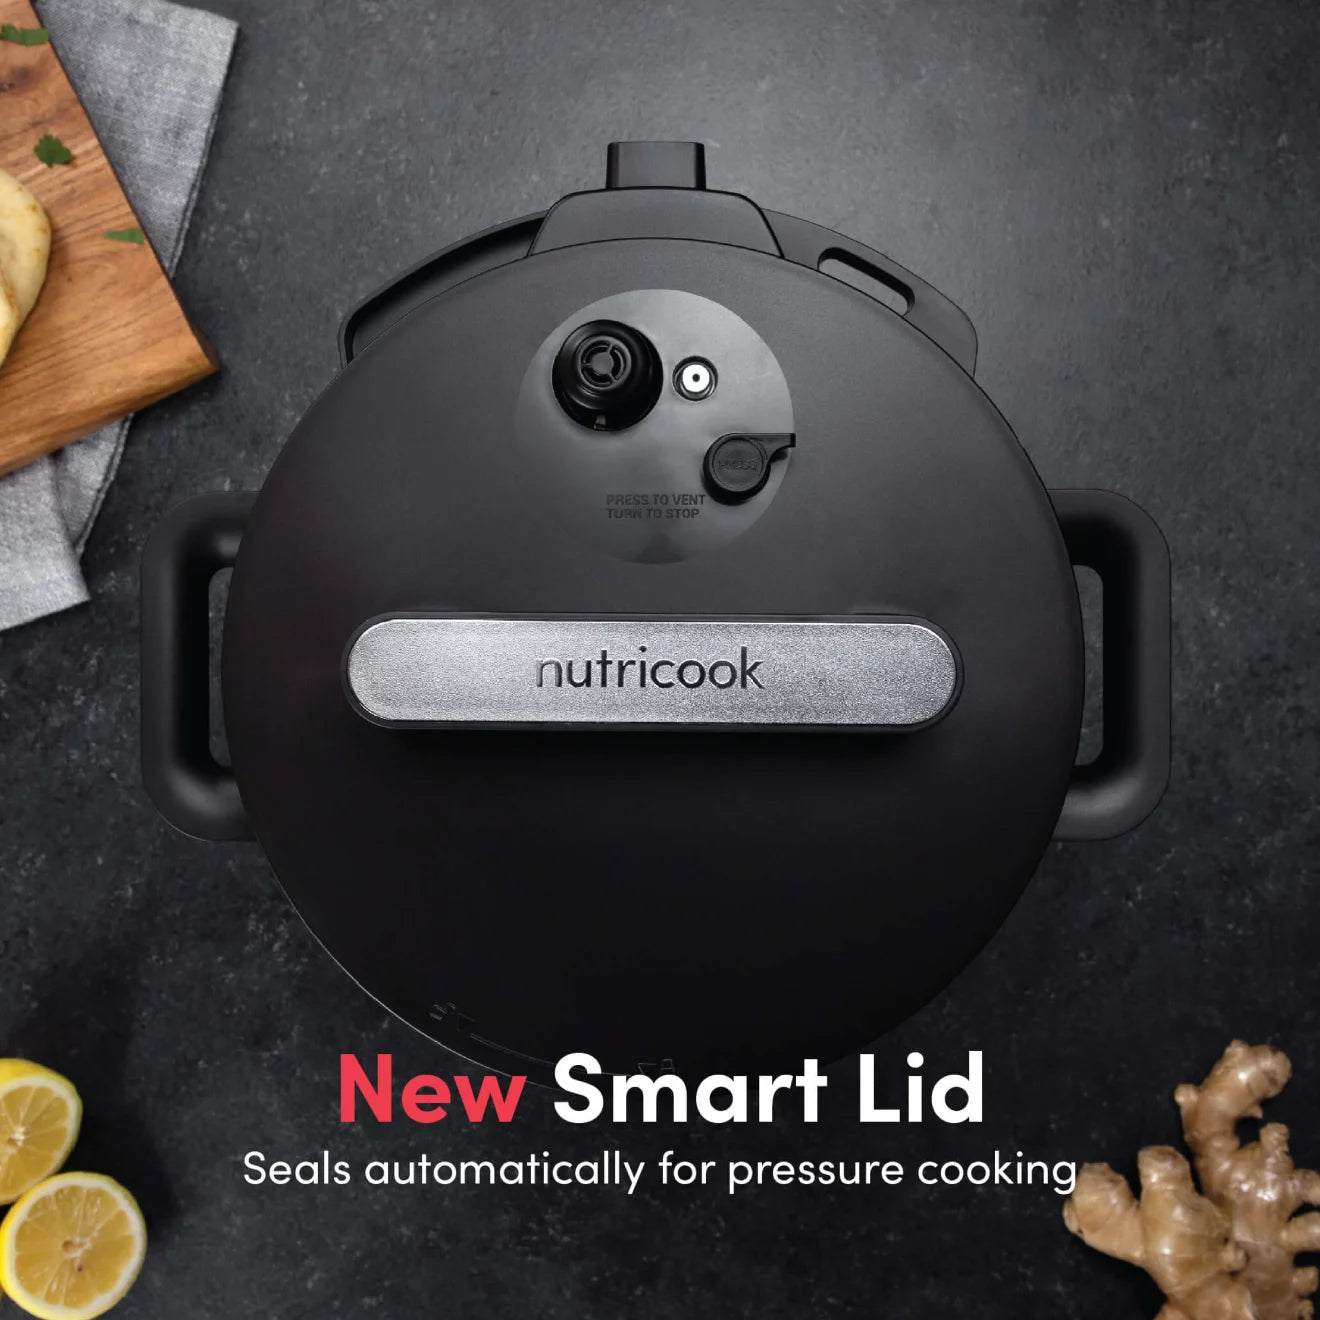 Nutricook Smartpot 2 / Electric Pressure Cooker - 6L